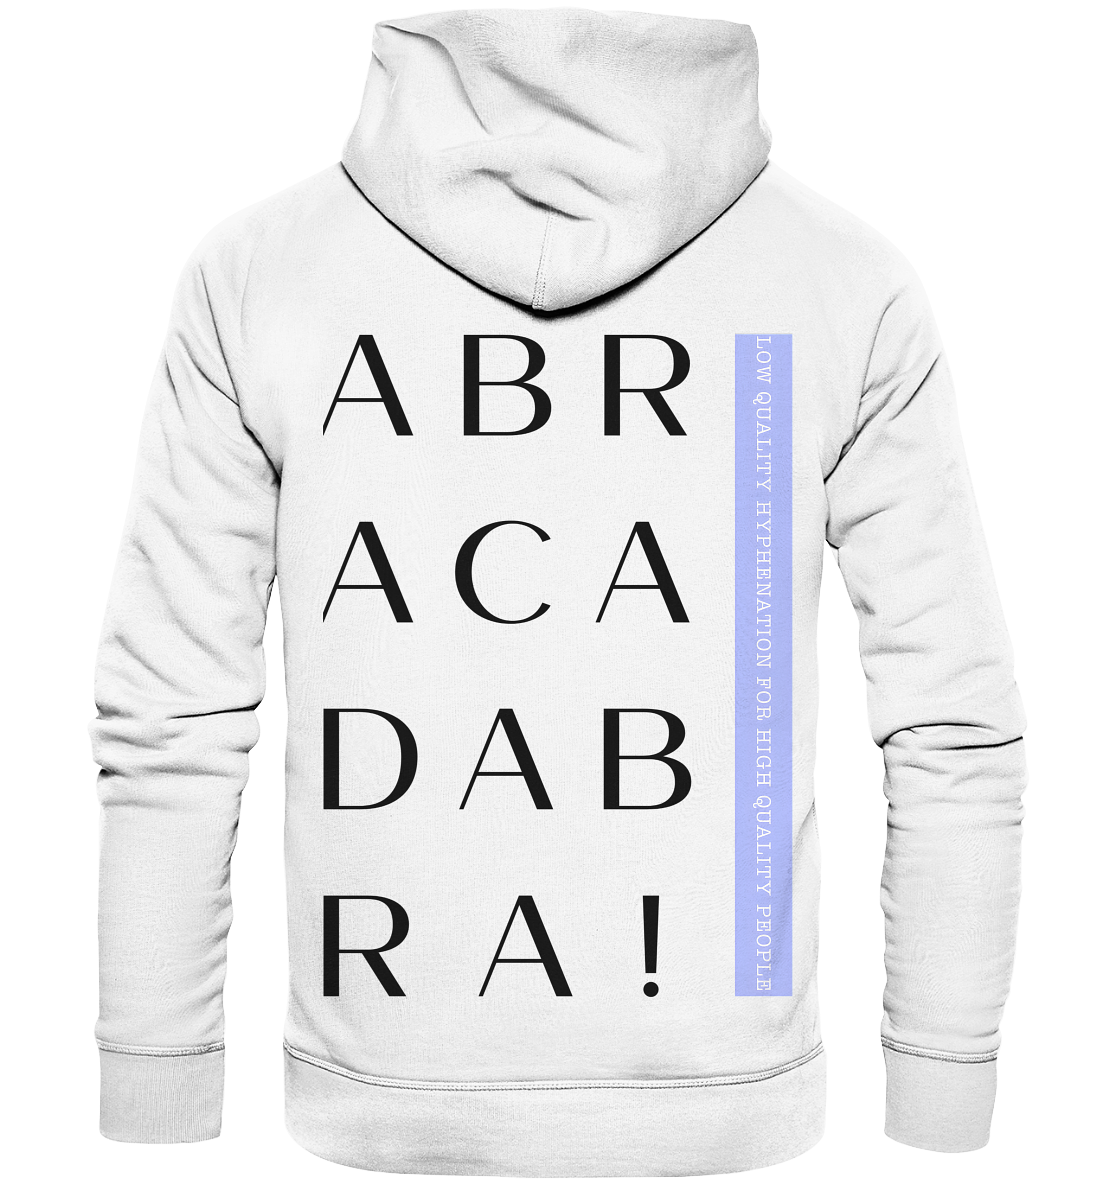 ABRACADABRA (LQHFHQP) - Organic Fashion Hoodie